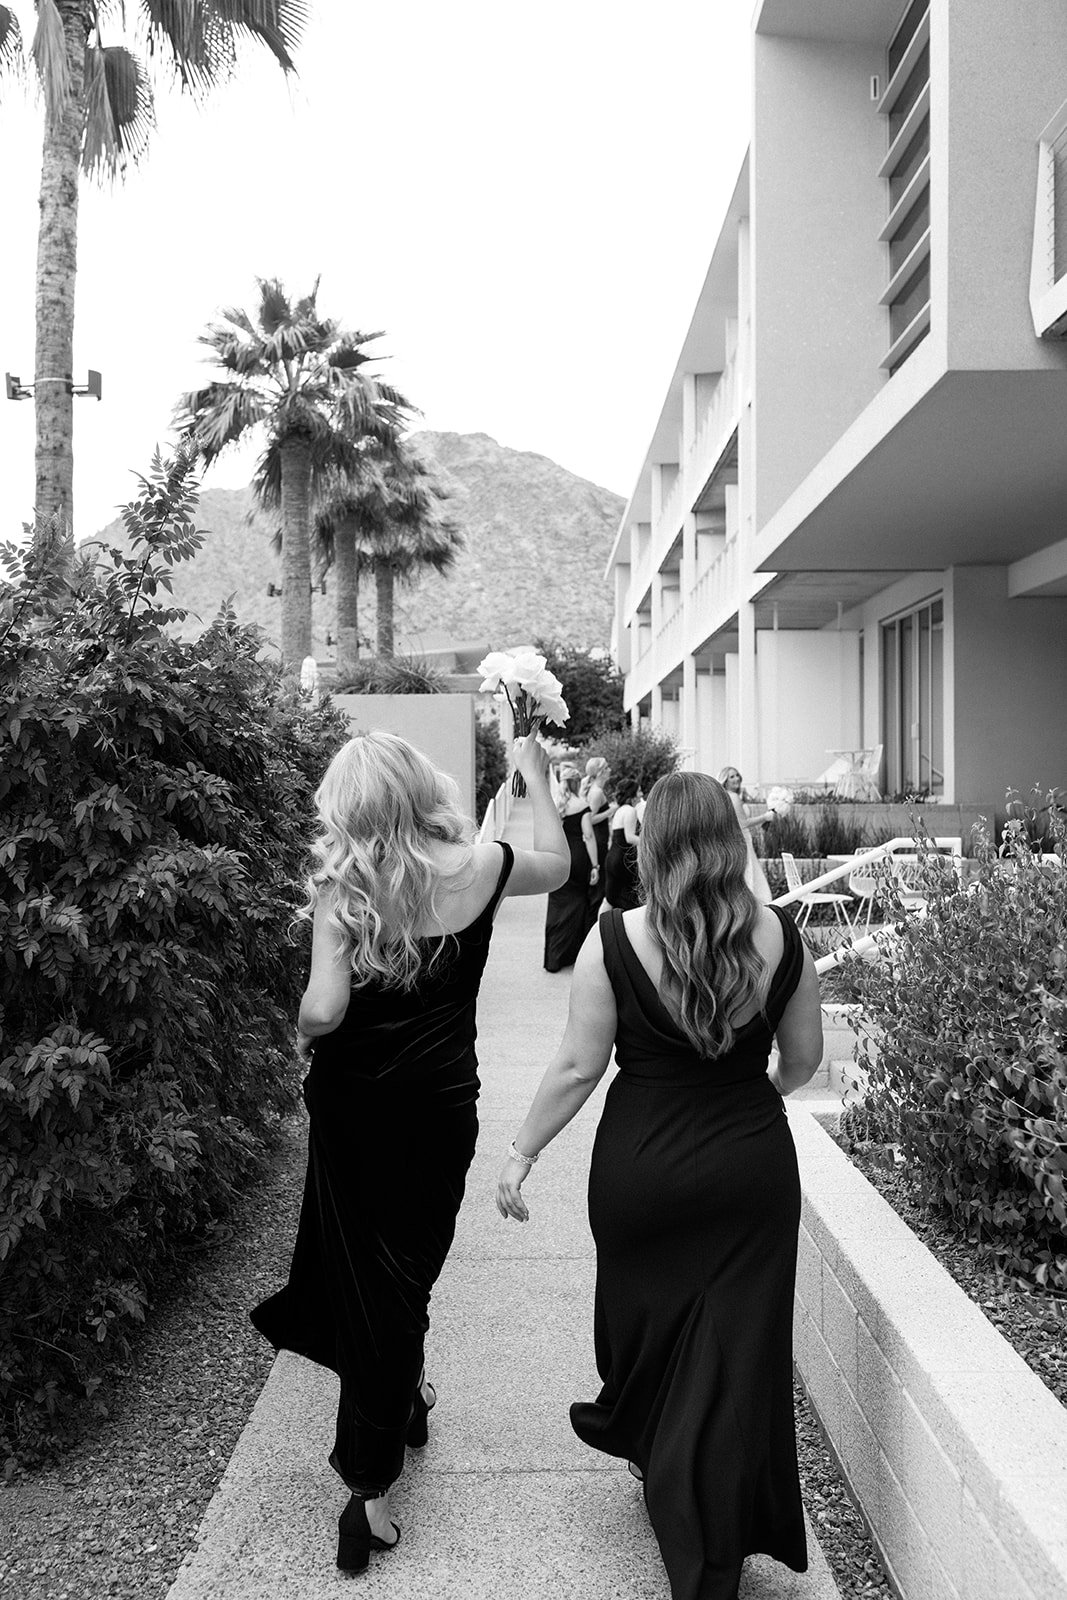 Wedding Ceremony at Mountain Shadow Resort in Scottsdale, Arizona 